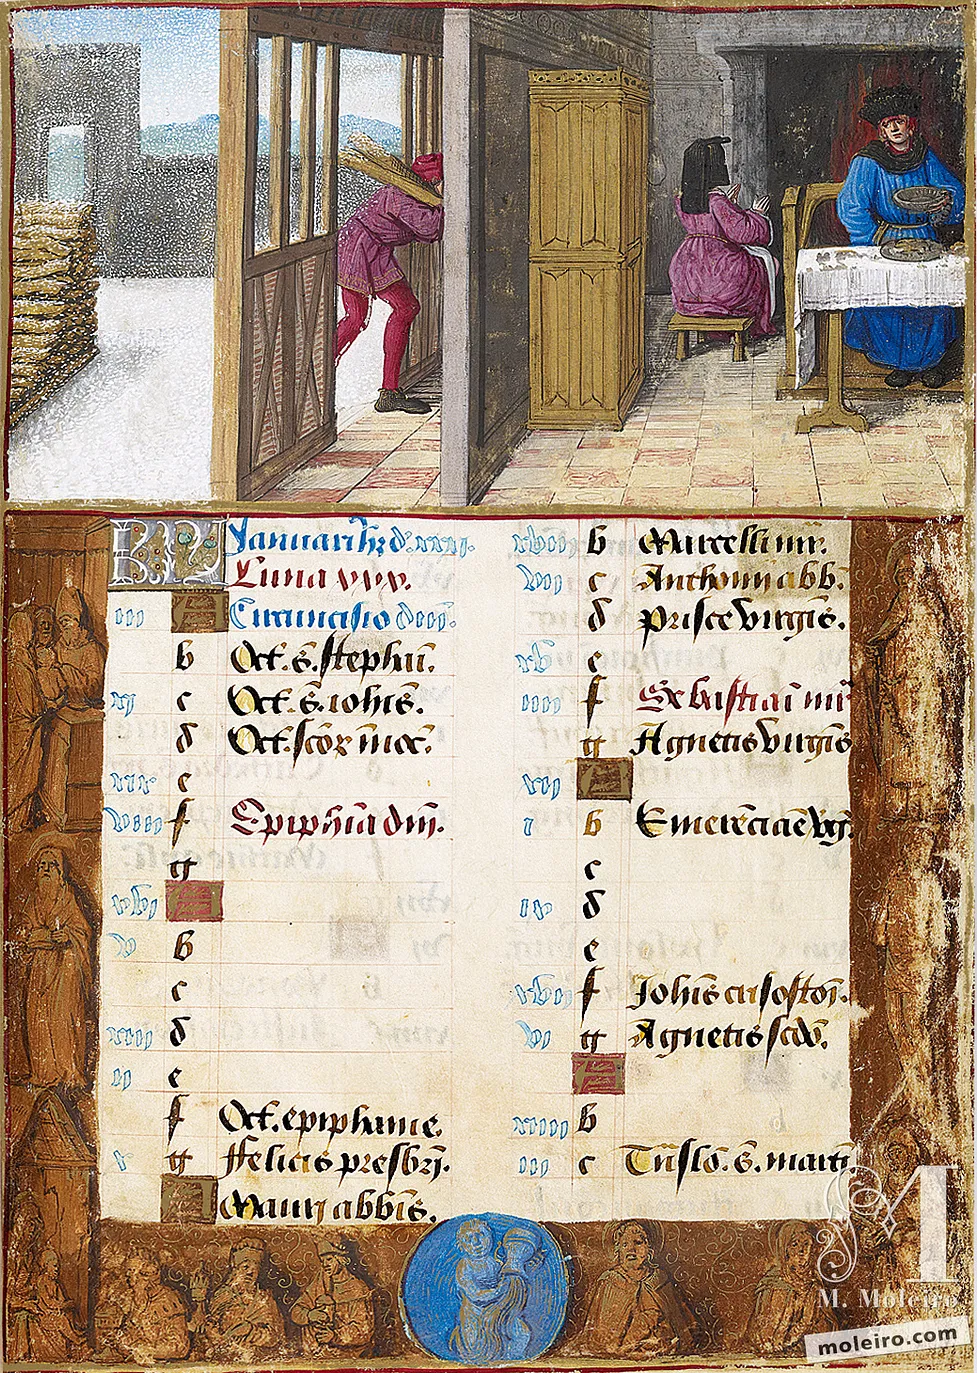 Medieval Facts & Myths: Why the loony calendar?